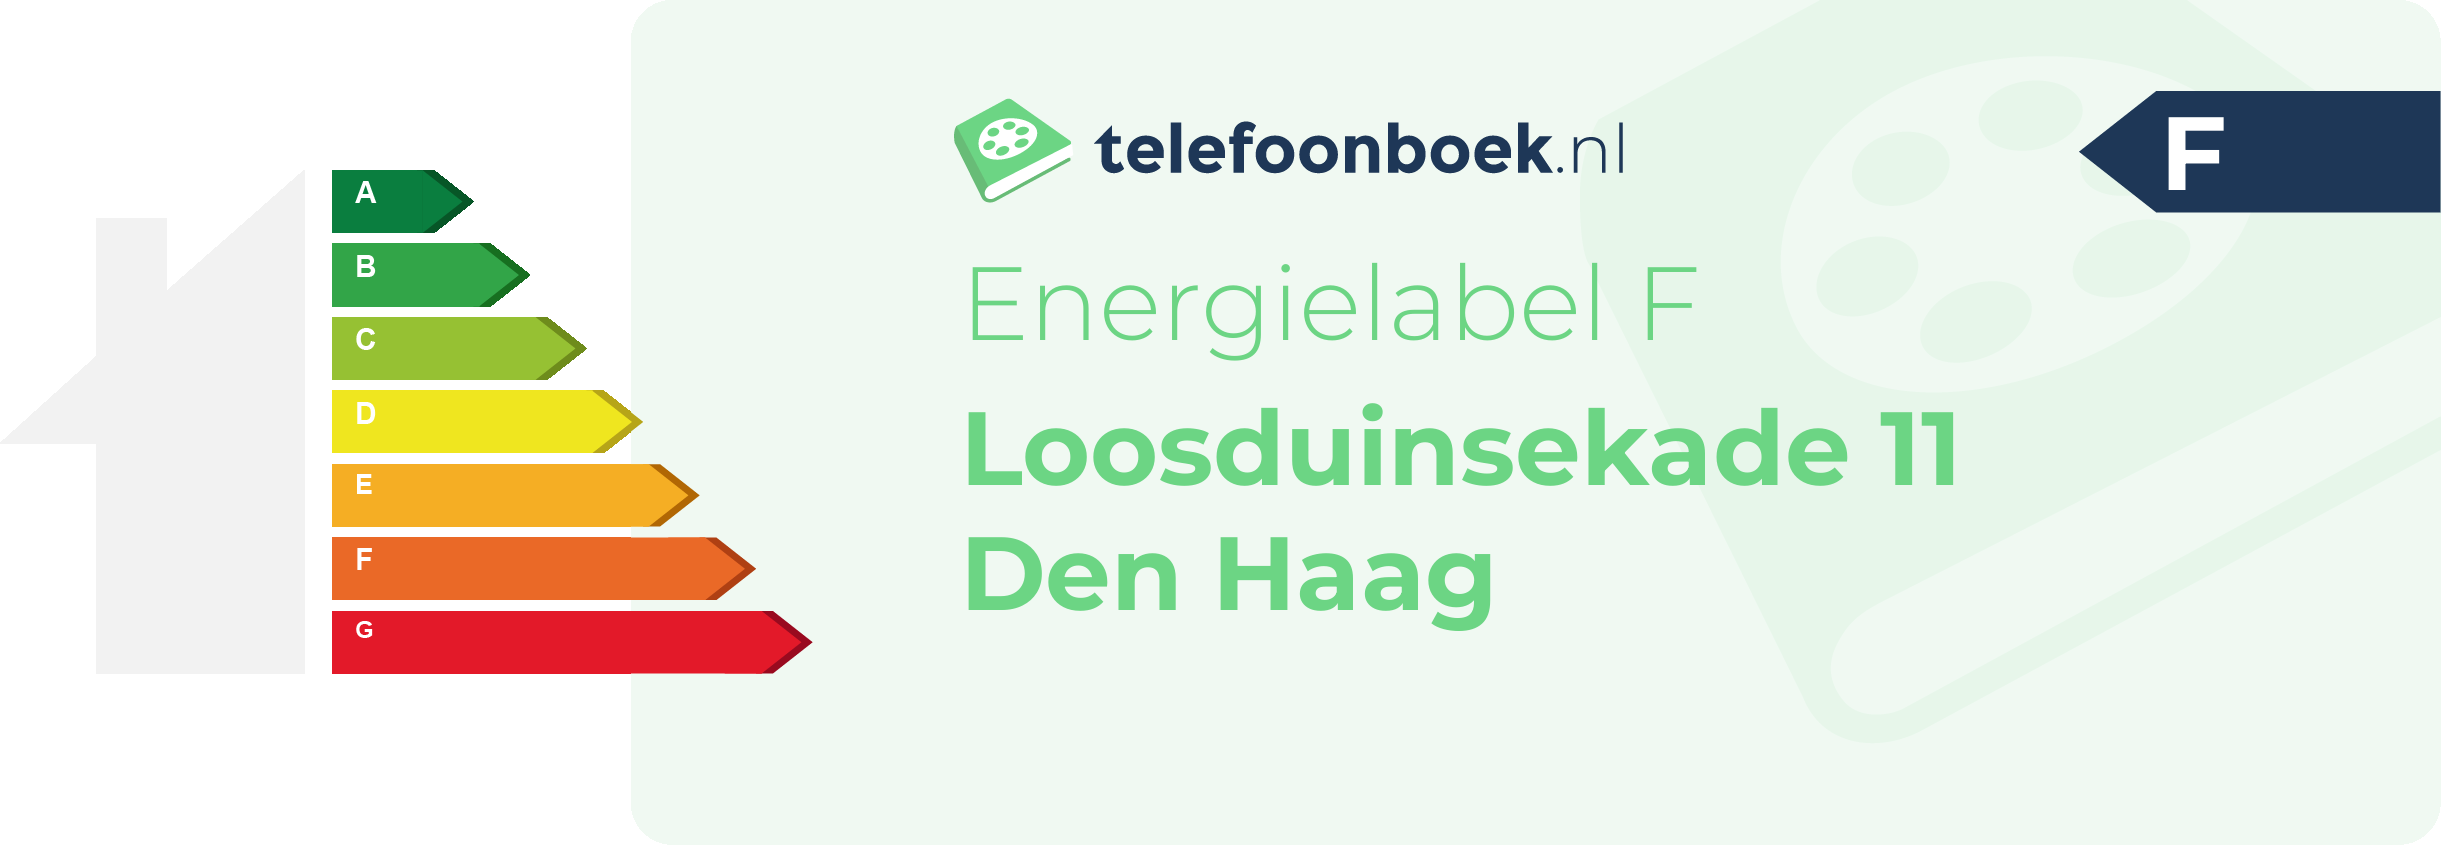 Energielabel Loosduinsekade 11 Den Haag